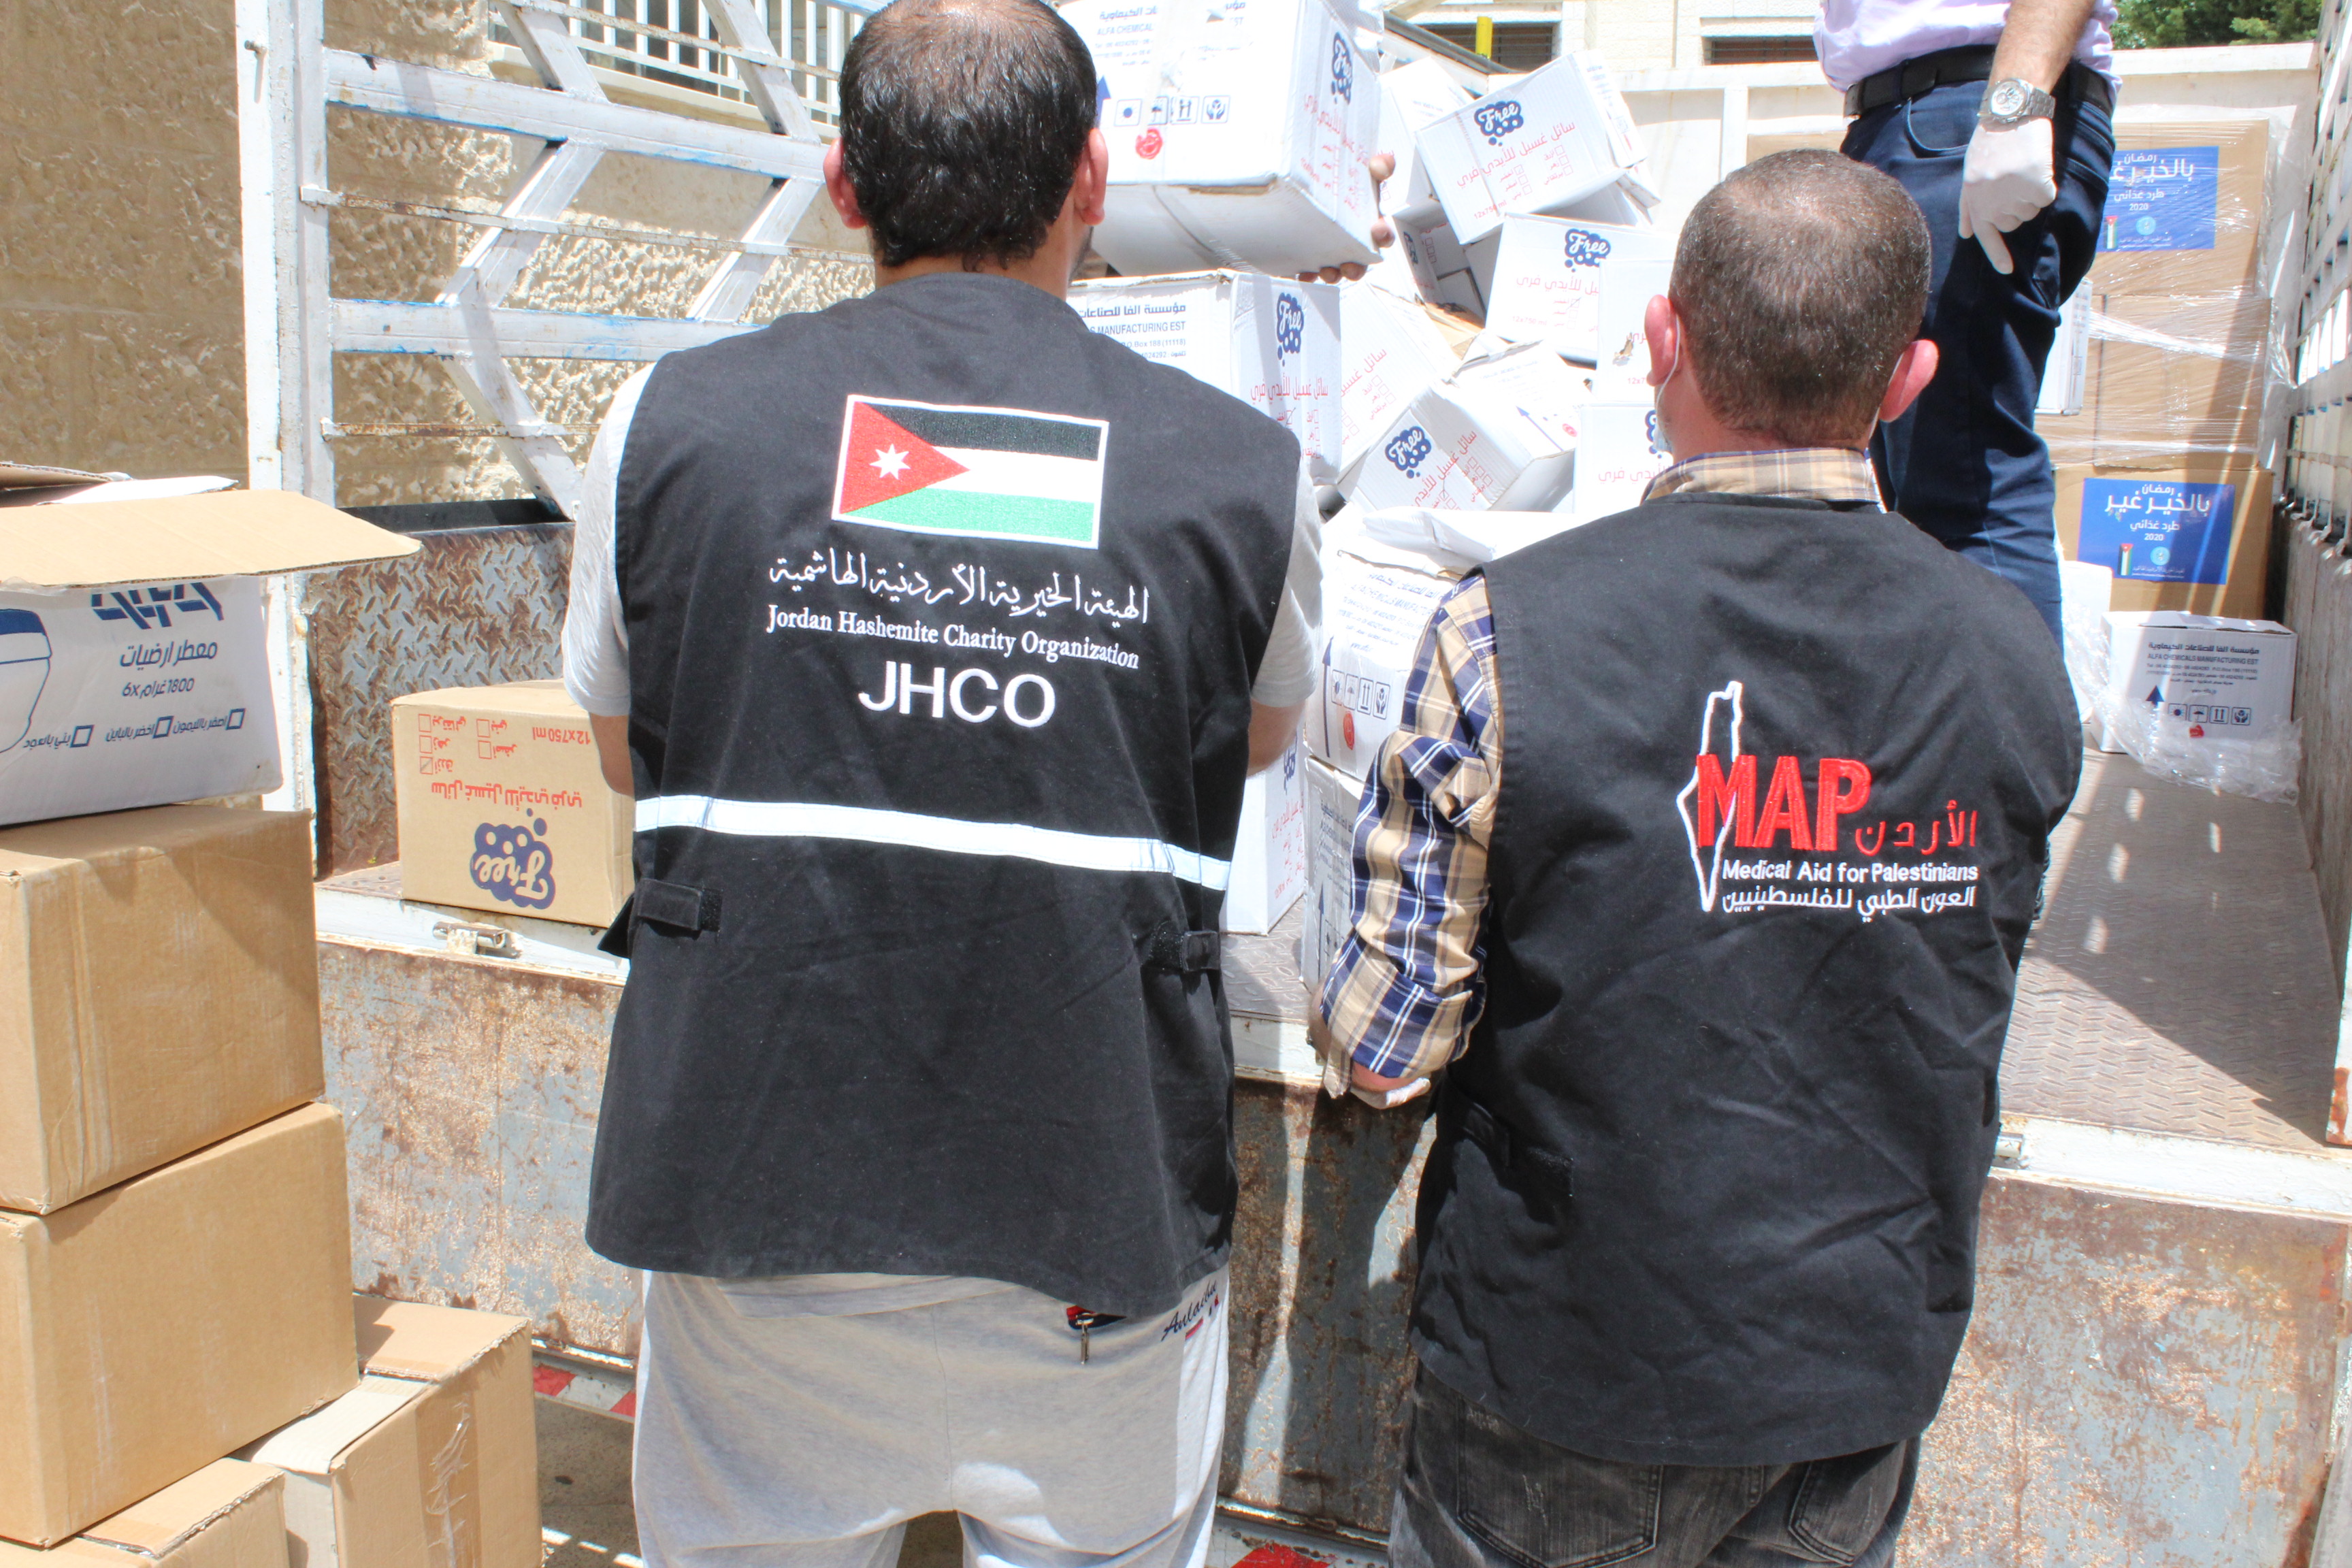 Jordan Hashemite Charity Organization supports MAP Jordan campaign during the Corona epidemic